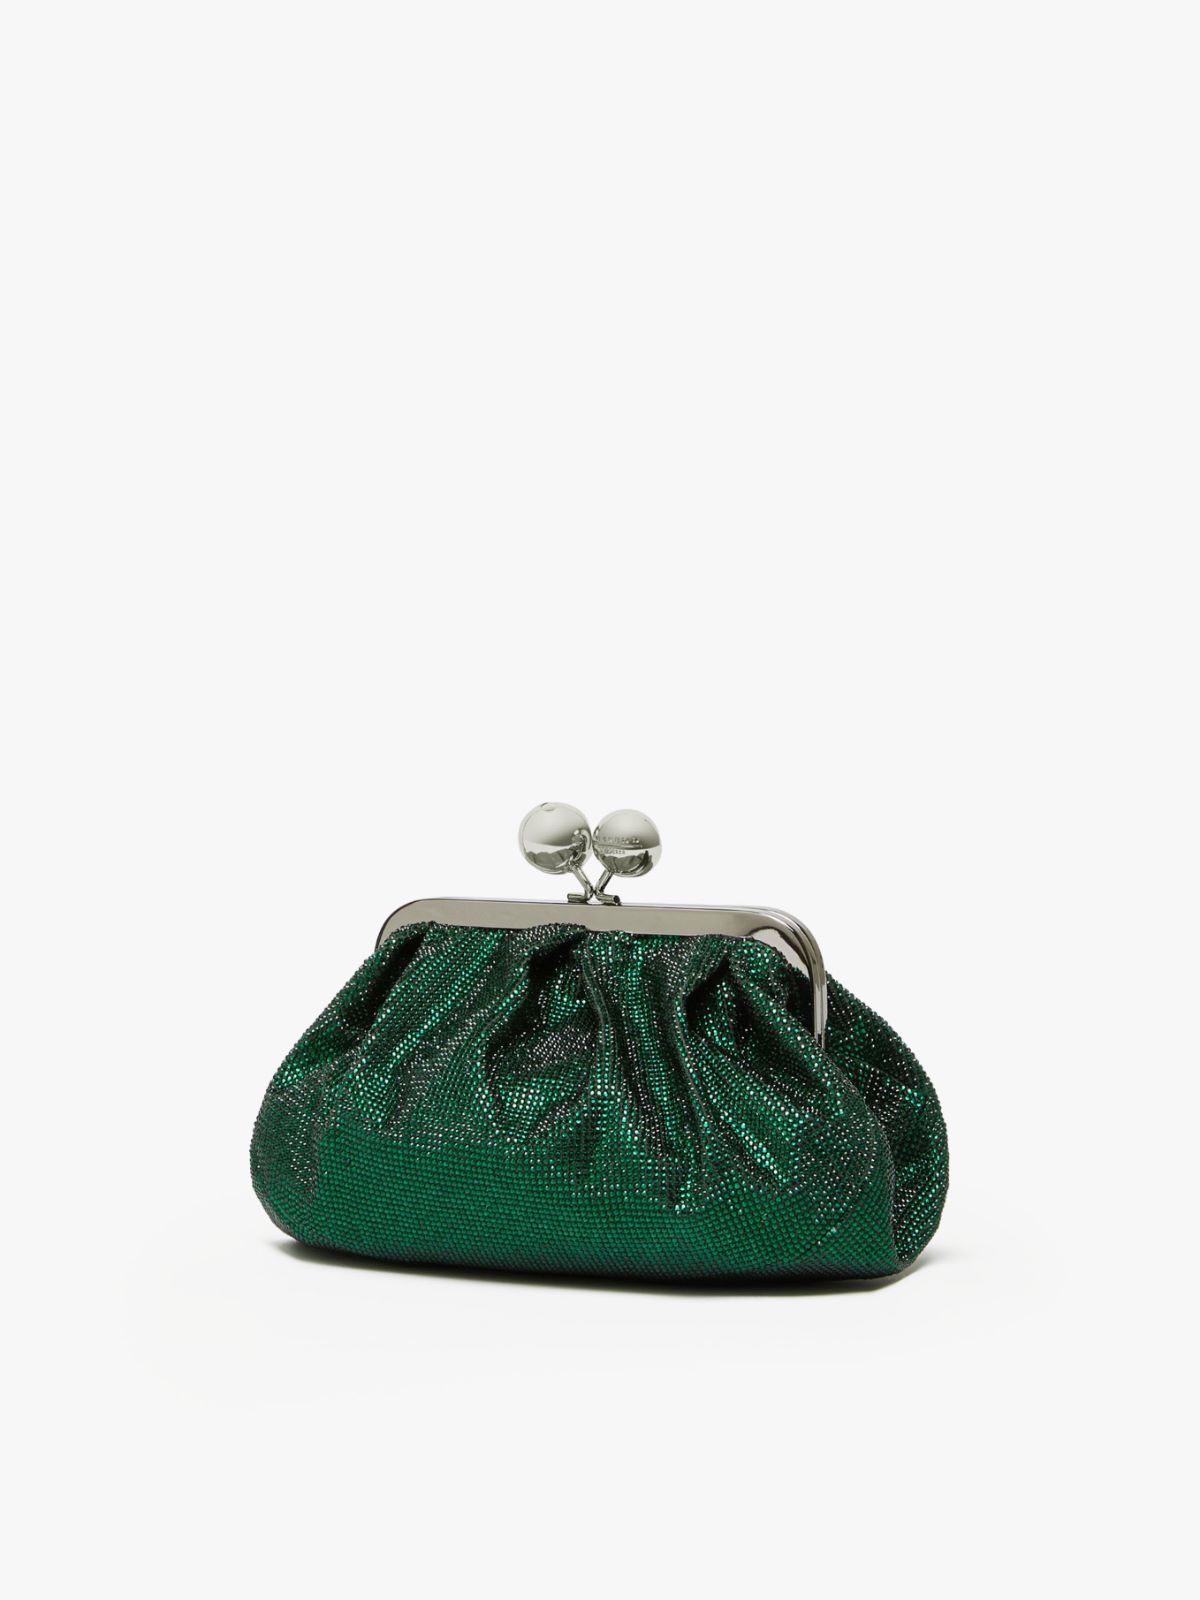 Small Pasticcino Bag in rhinestones - EMERALD - Weekend Max Mara - 2